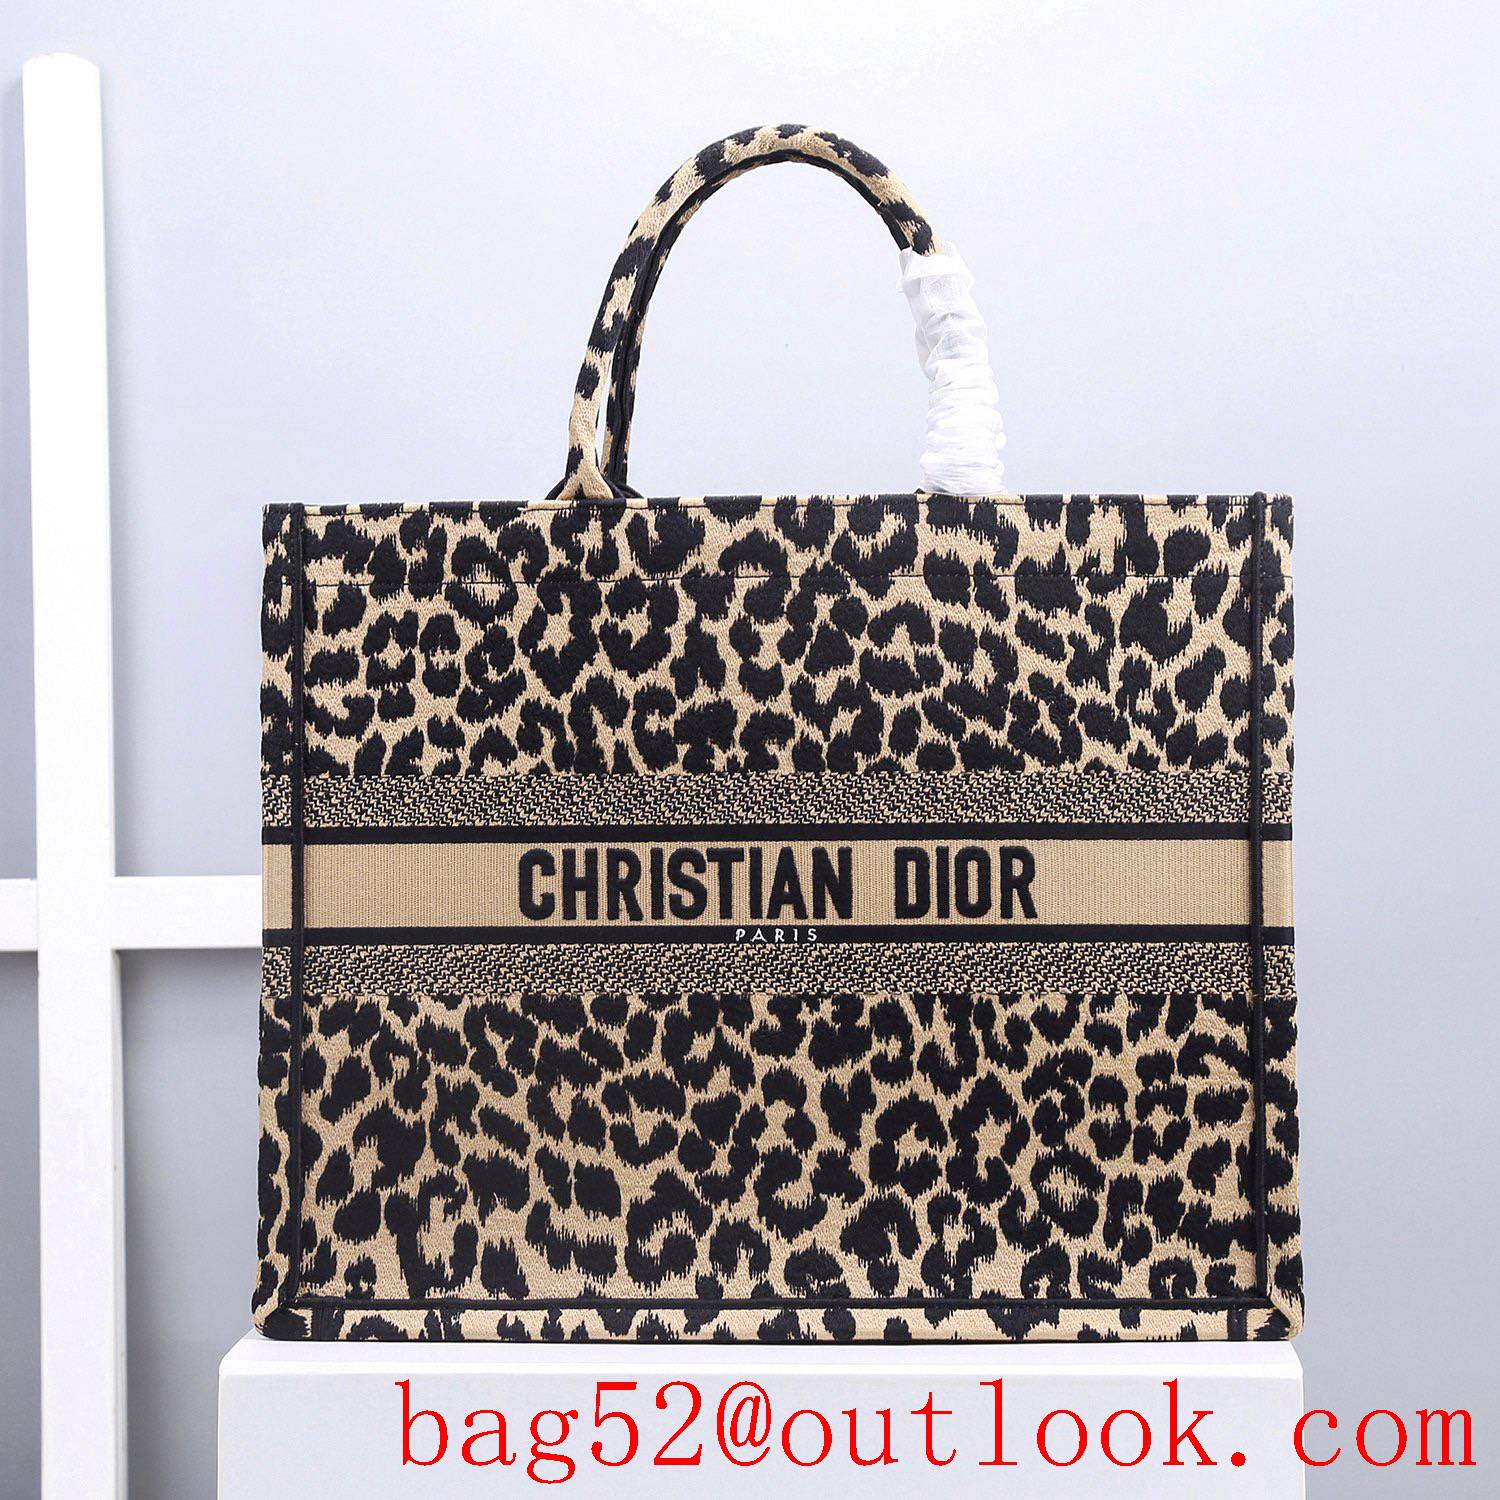 Dior black Leopard print large book tote lady bag handbag